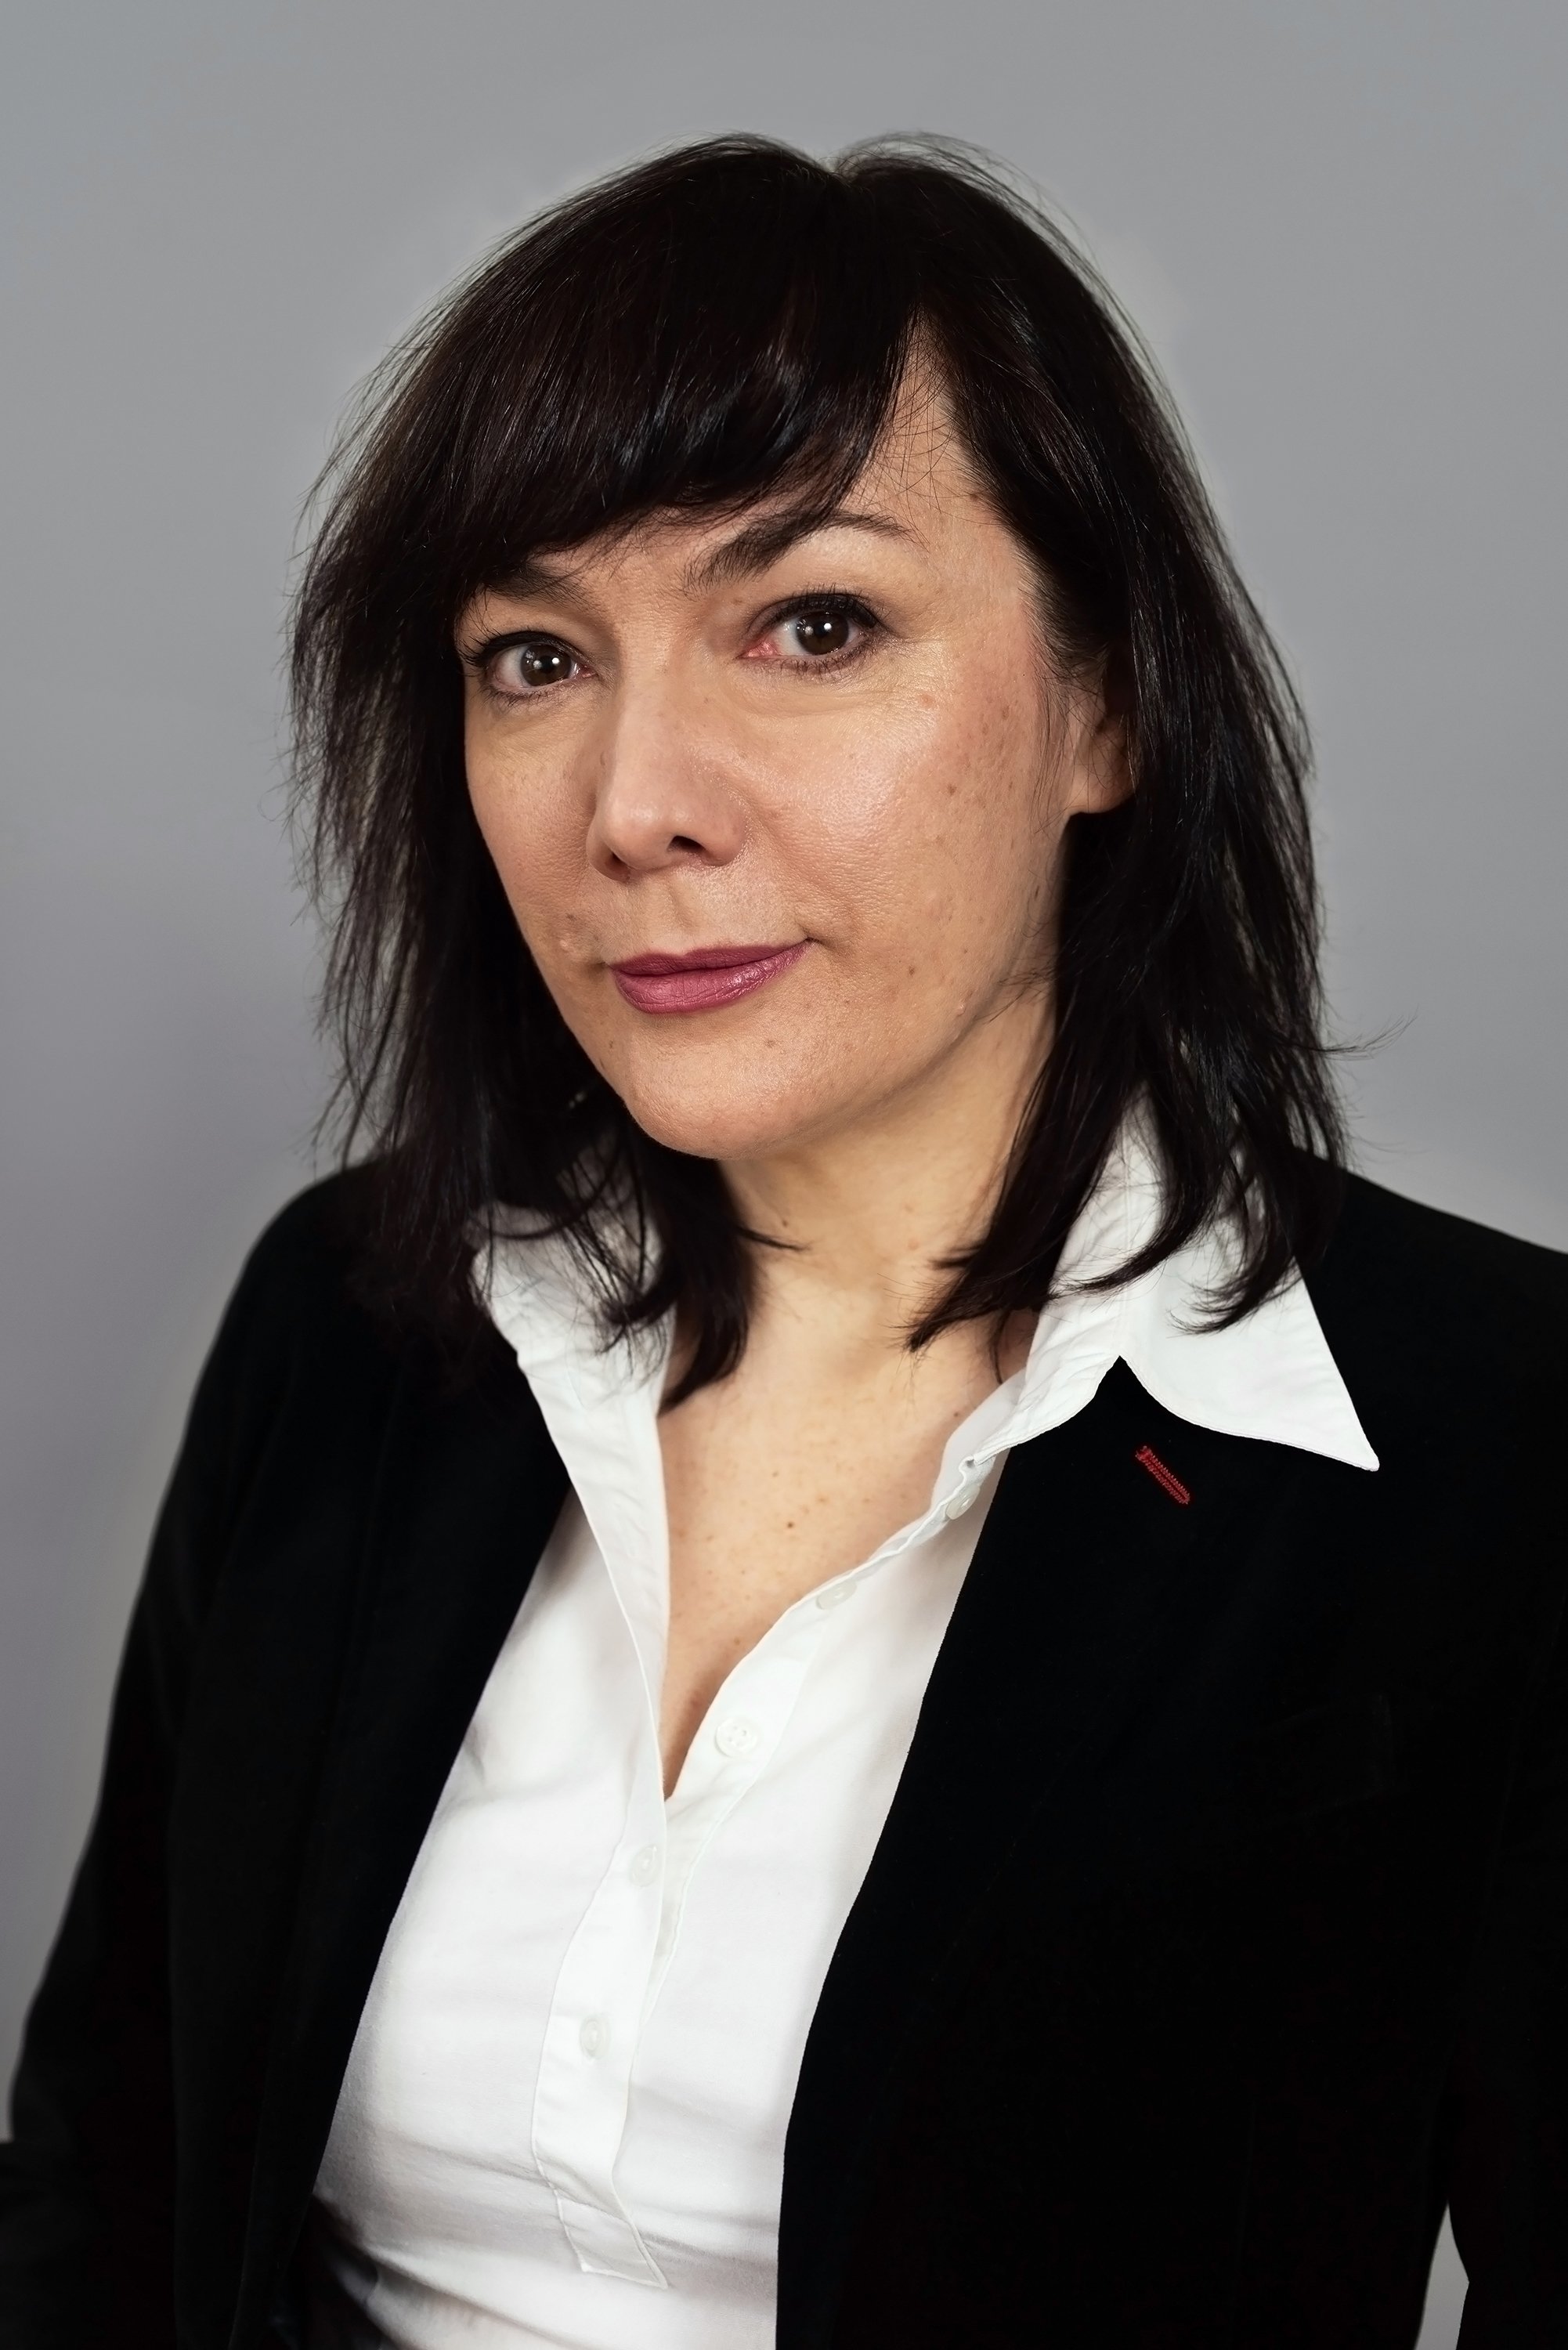  Corporate headshot of woman in a dark jacket and white top by Ari Scott, NYC headshot photographer. 